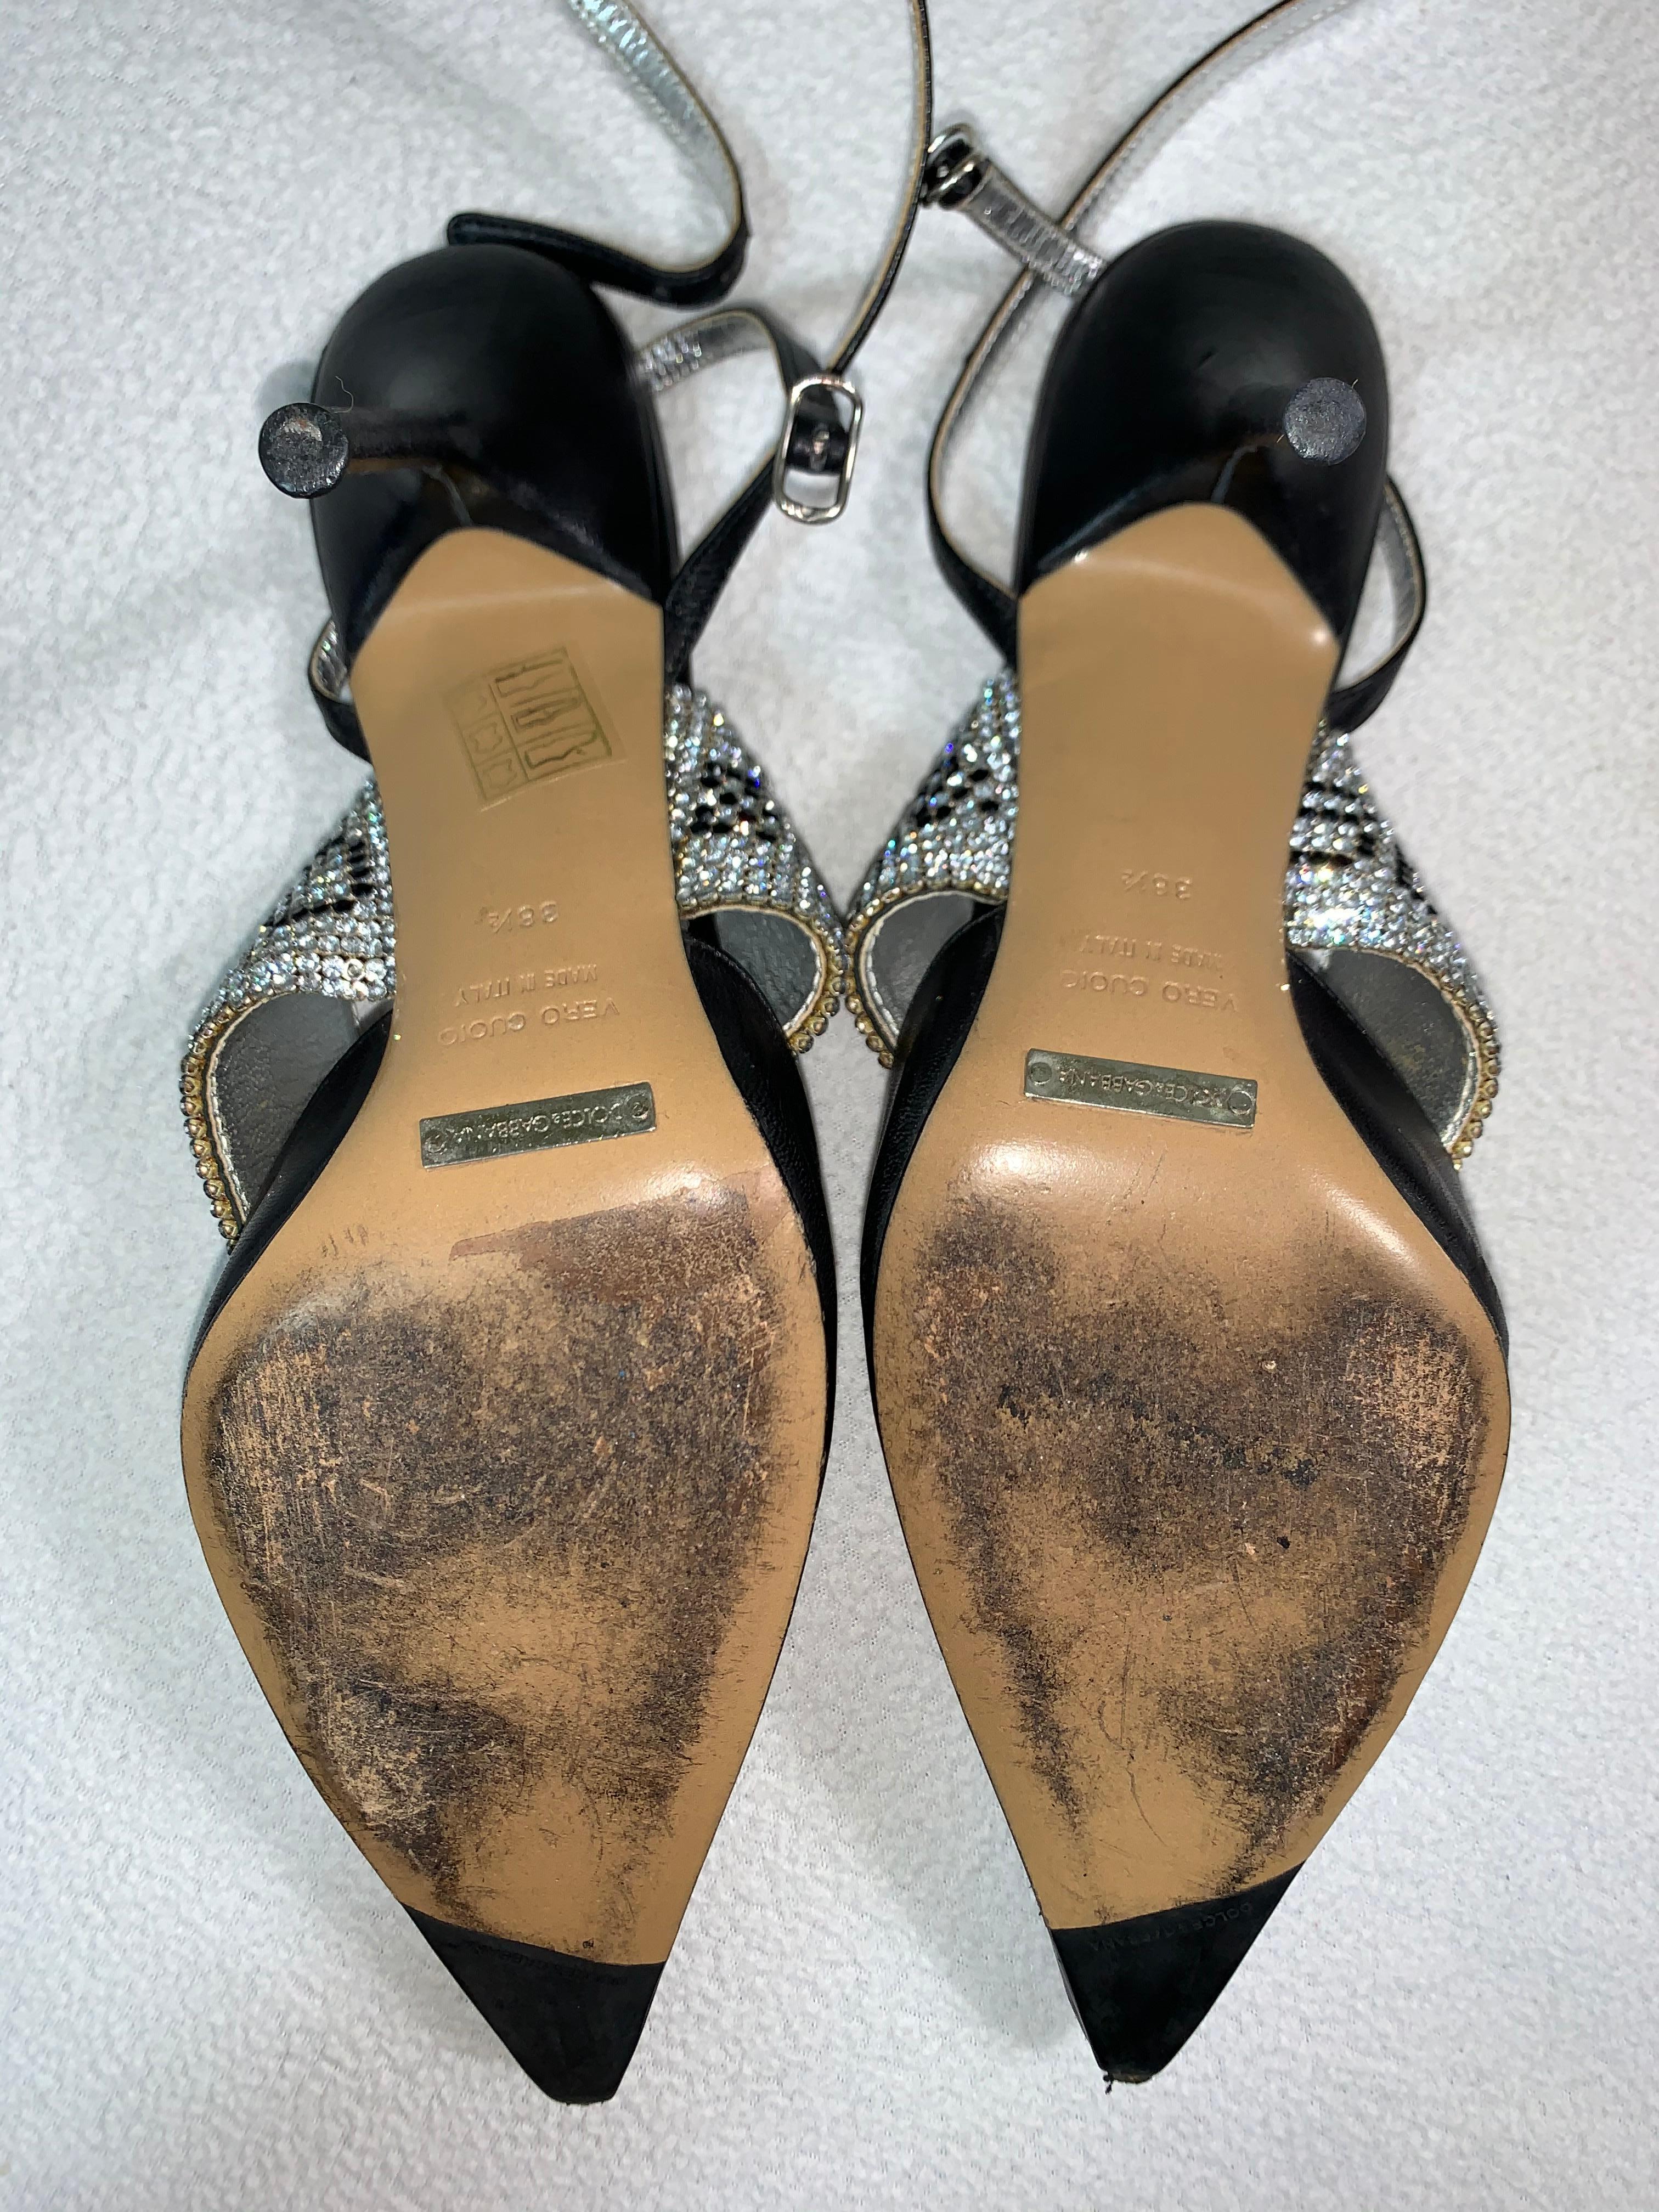 S/S 2000 Dolce & Gabbana Crystal Logo Black Leather High Heels 38.5 In Good Condition In Yukon, OK